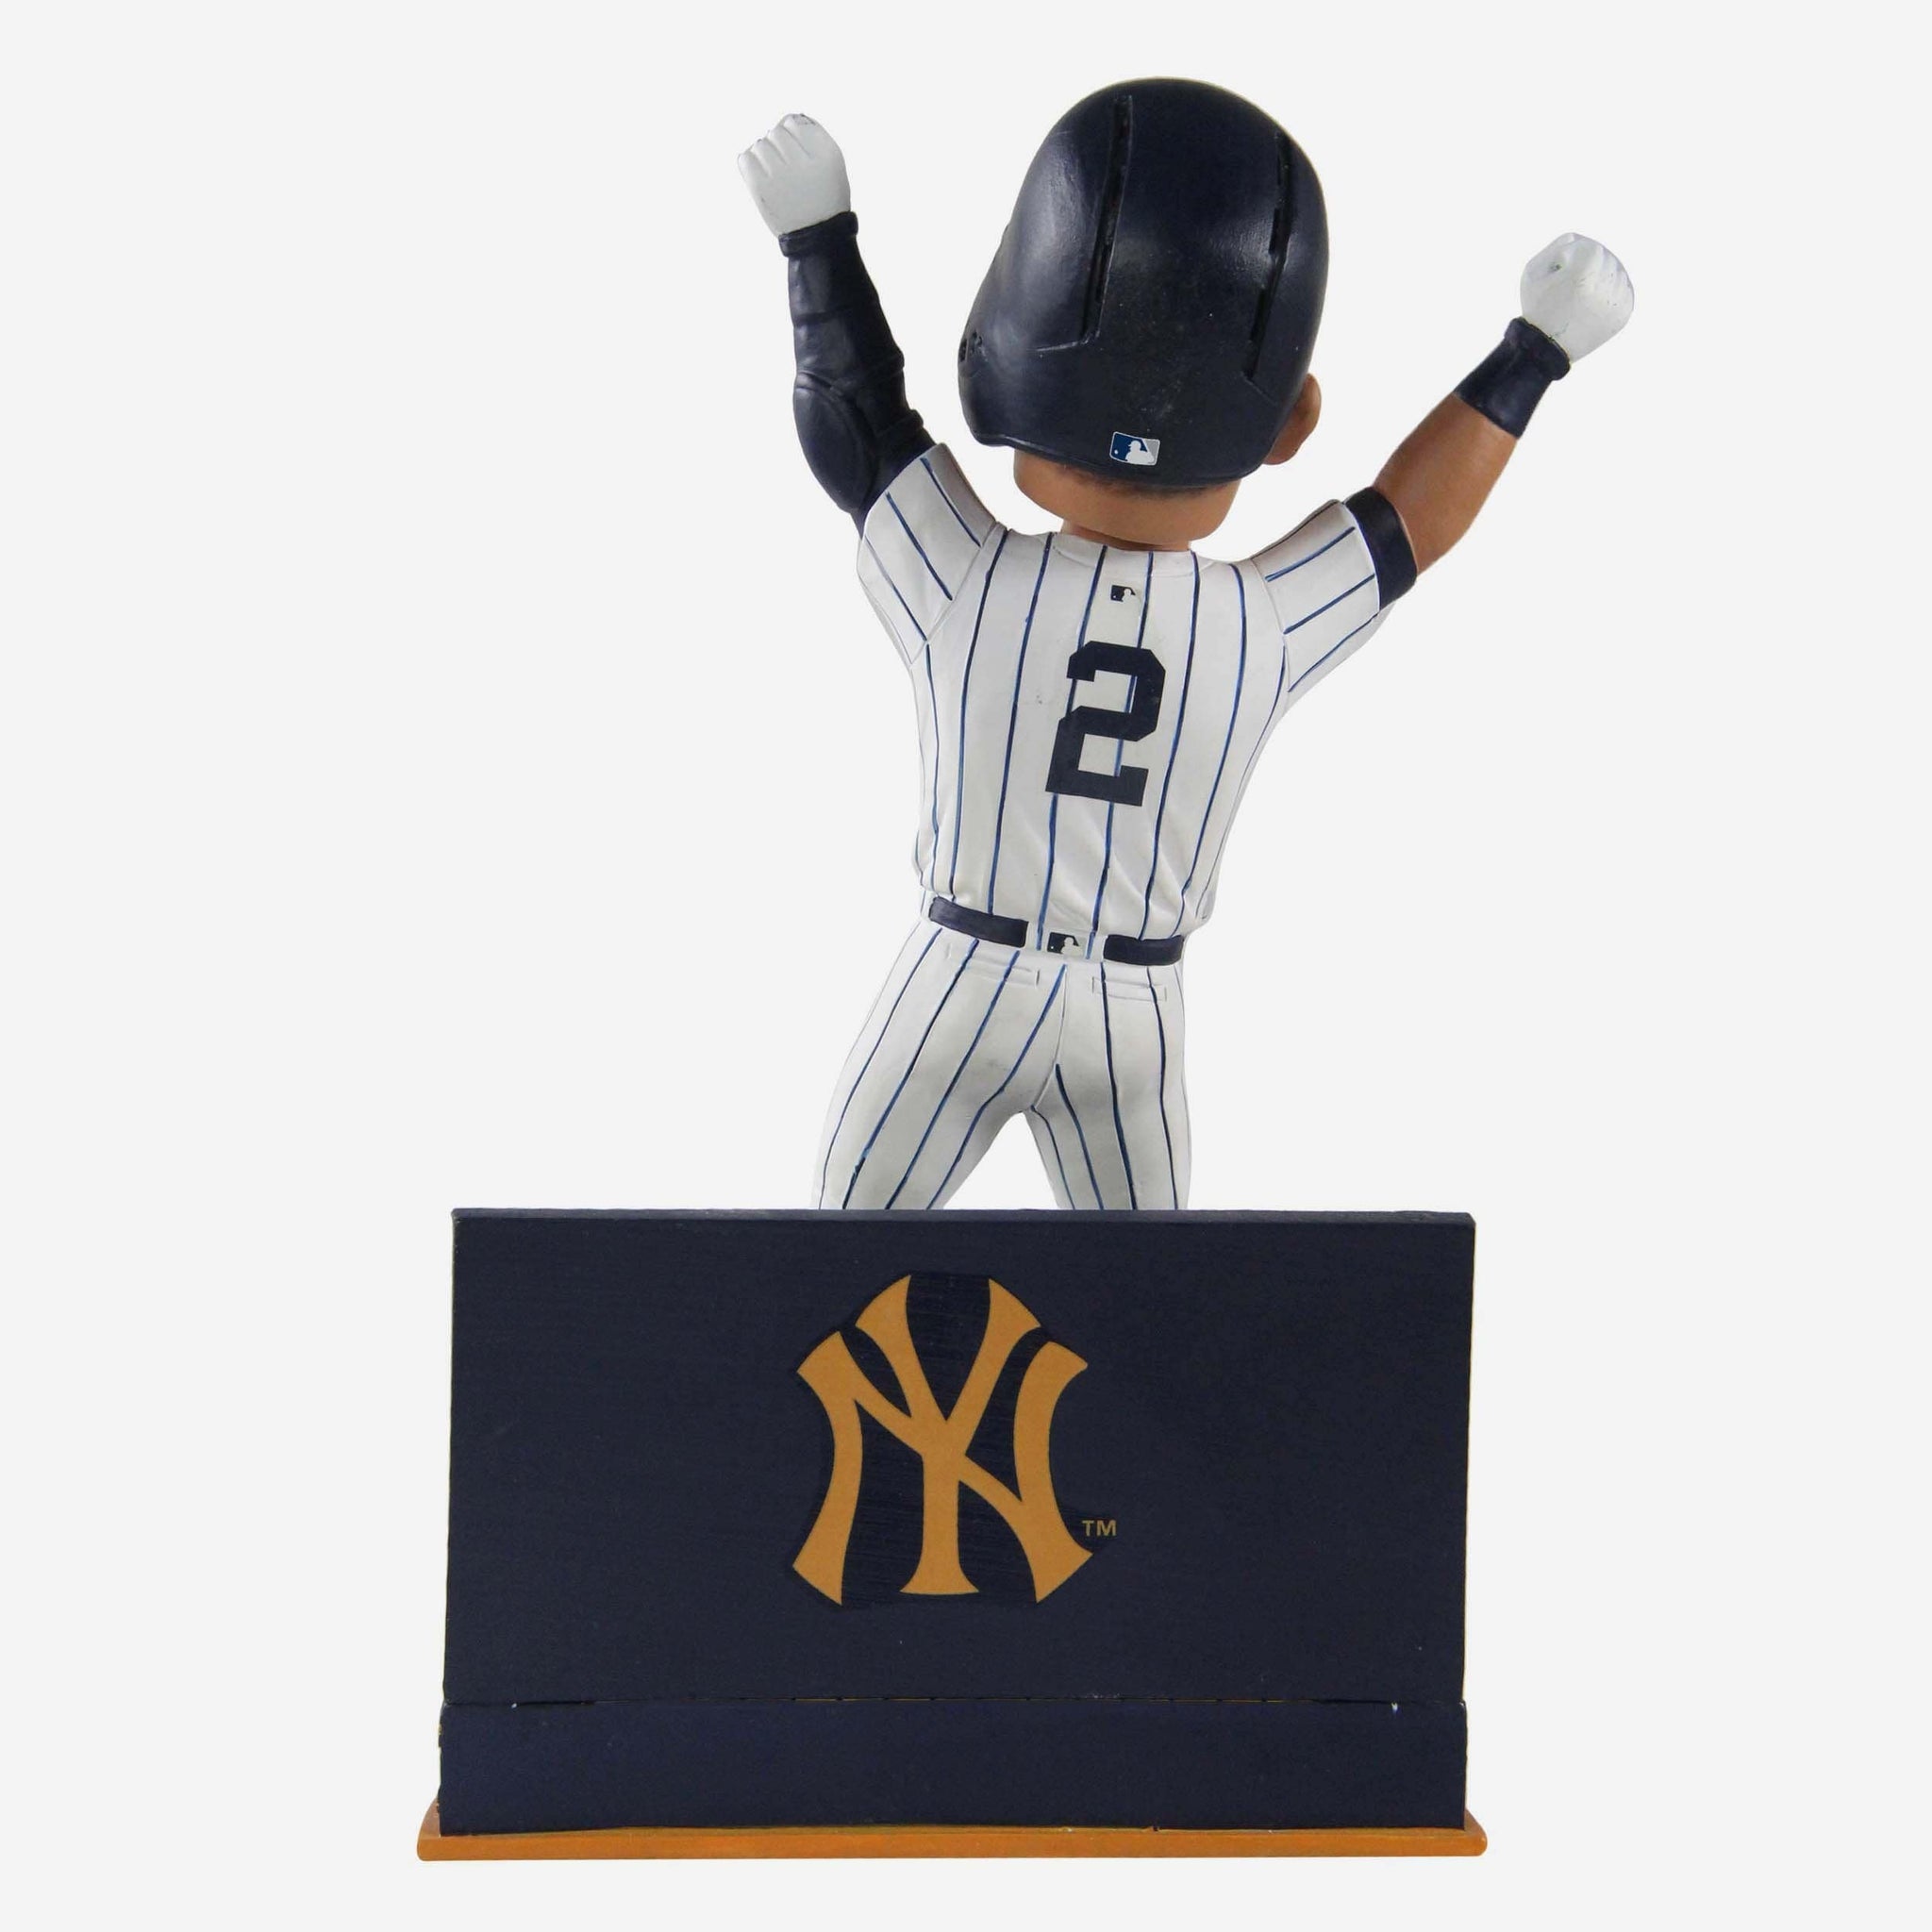 LOOK: FOCO releases bobblehead commemorating Yankees great Derek Jeter's  iconic career